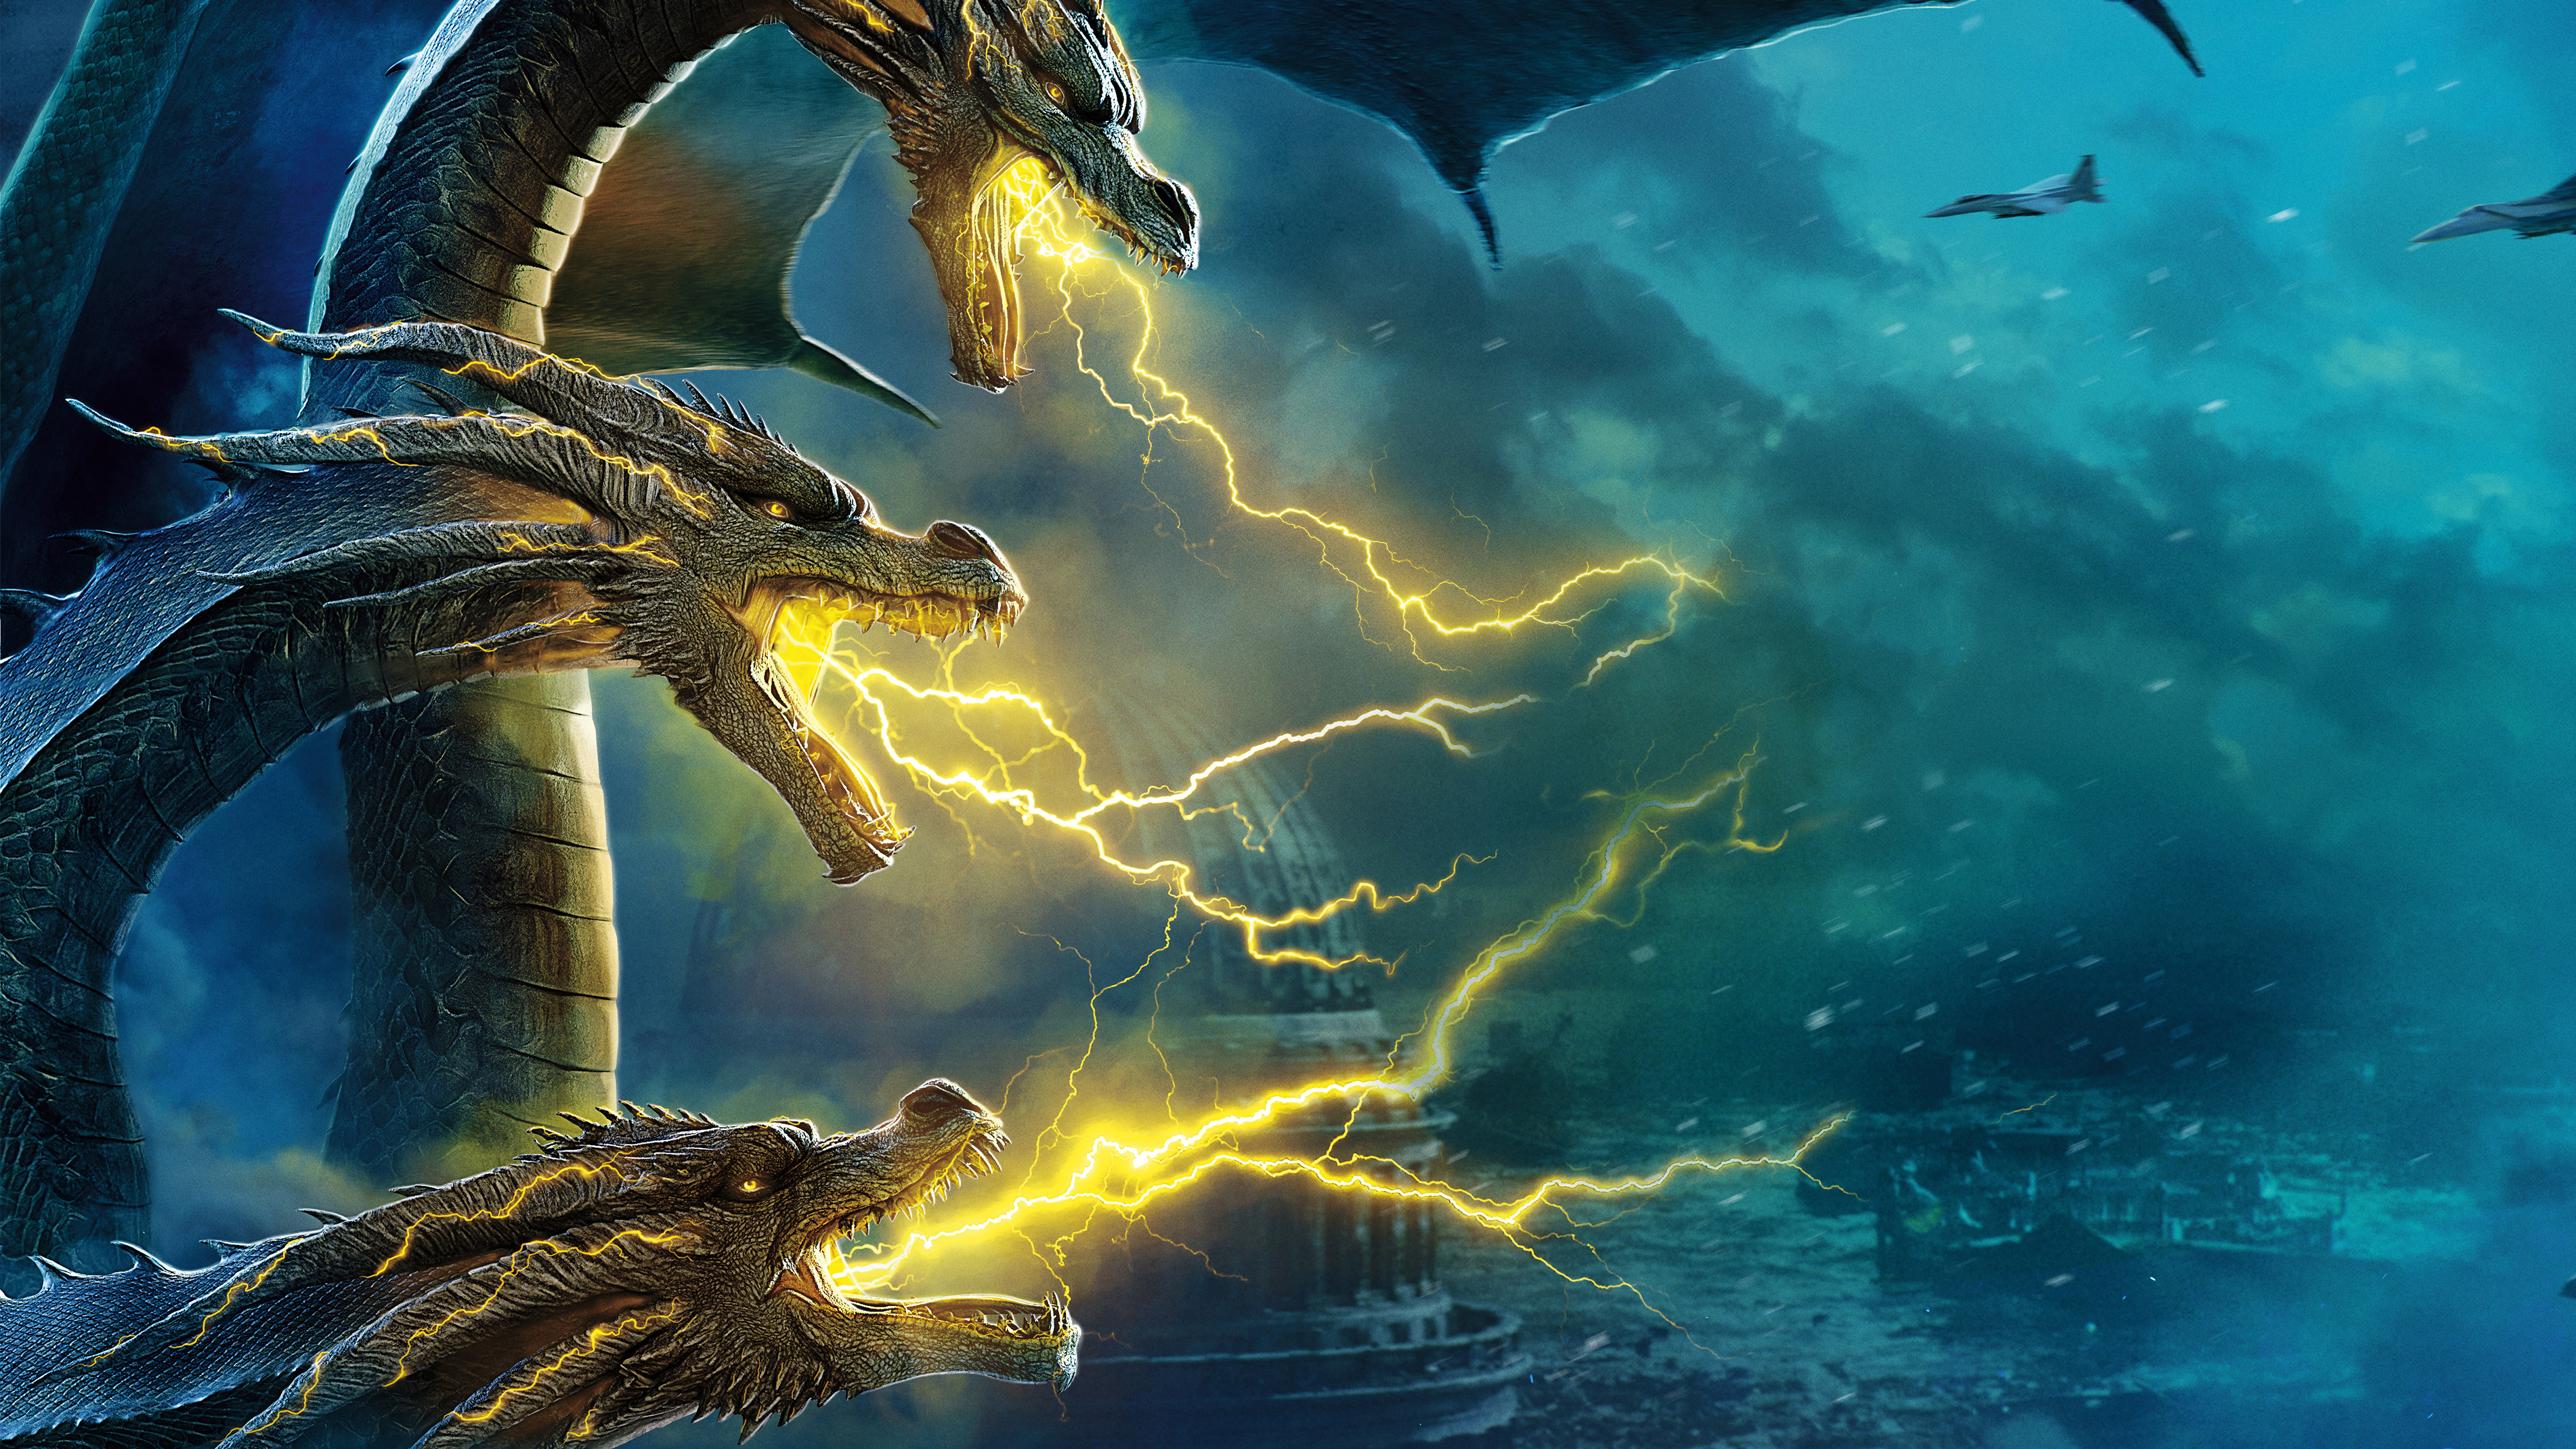 King Ghidorah Godzilla Of The Monsters 8k Wallpaper